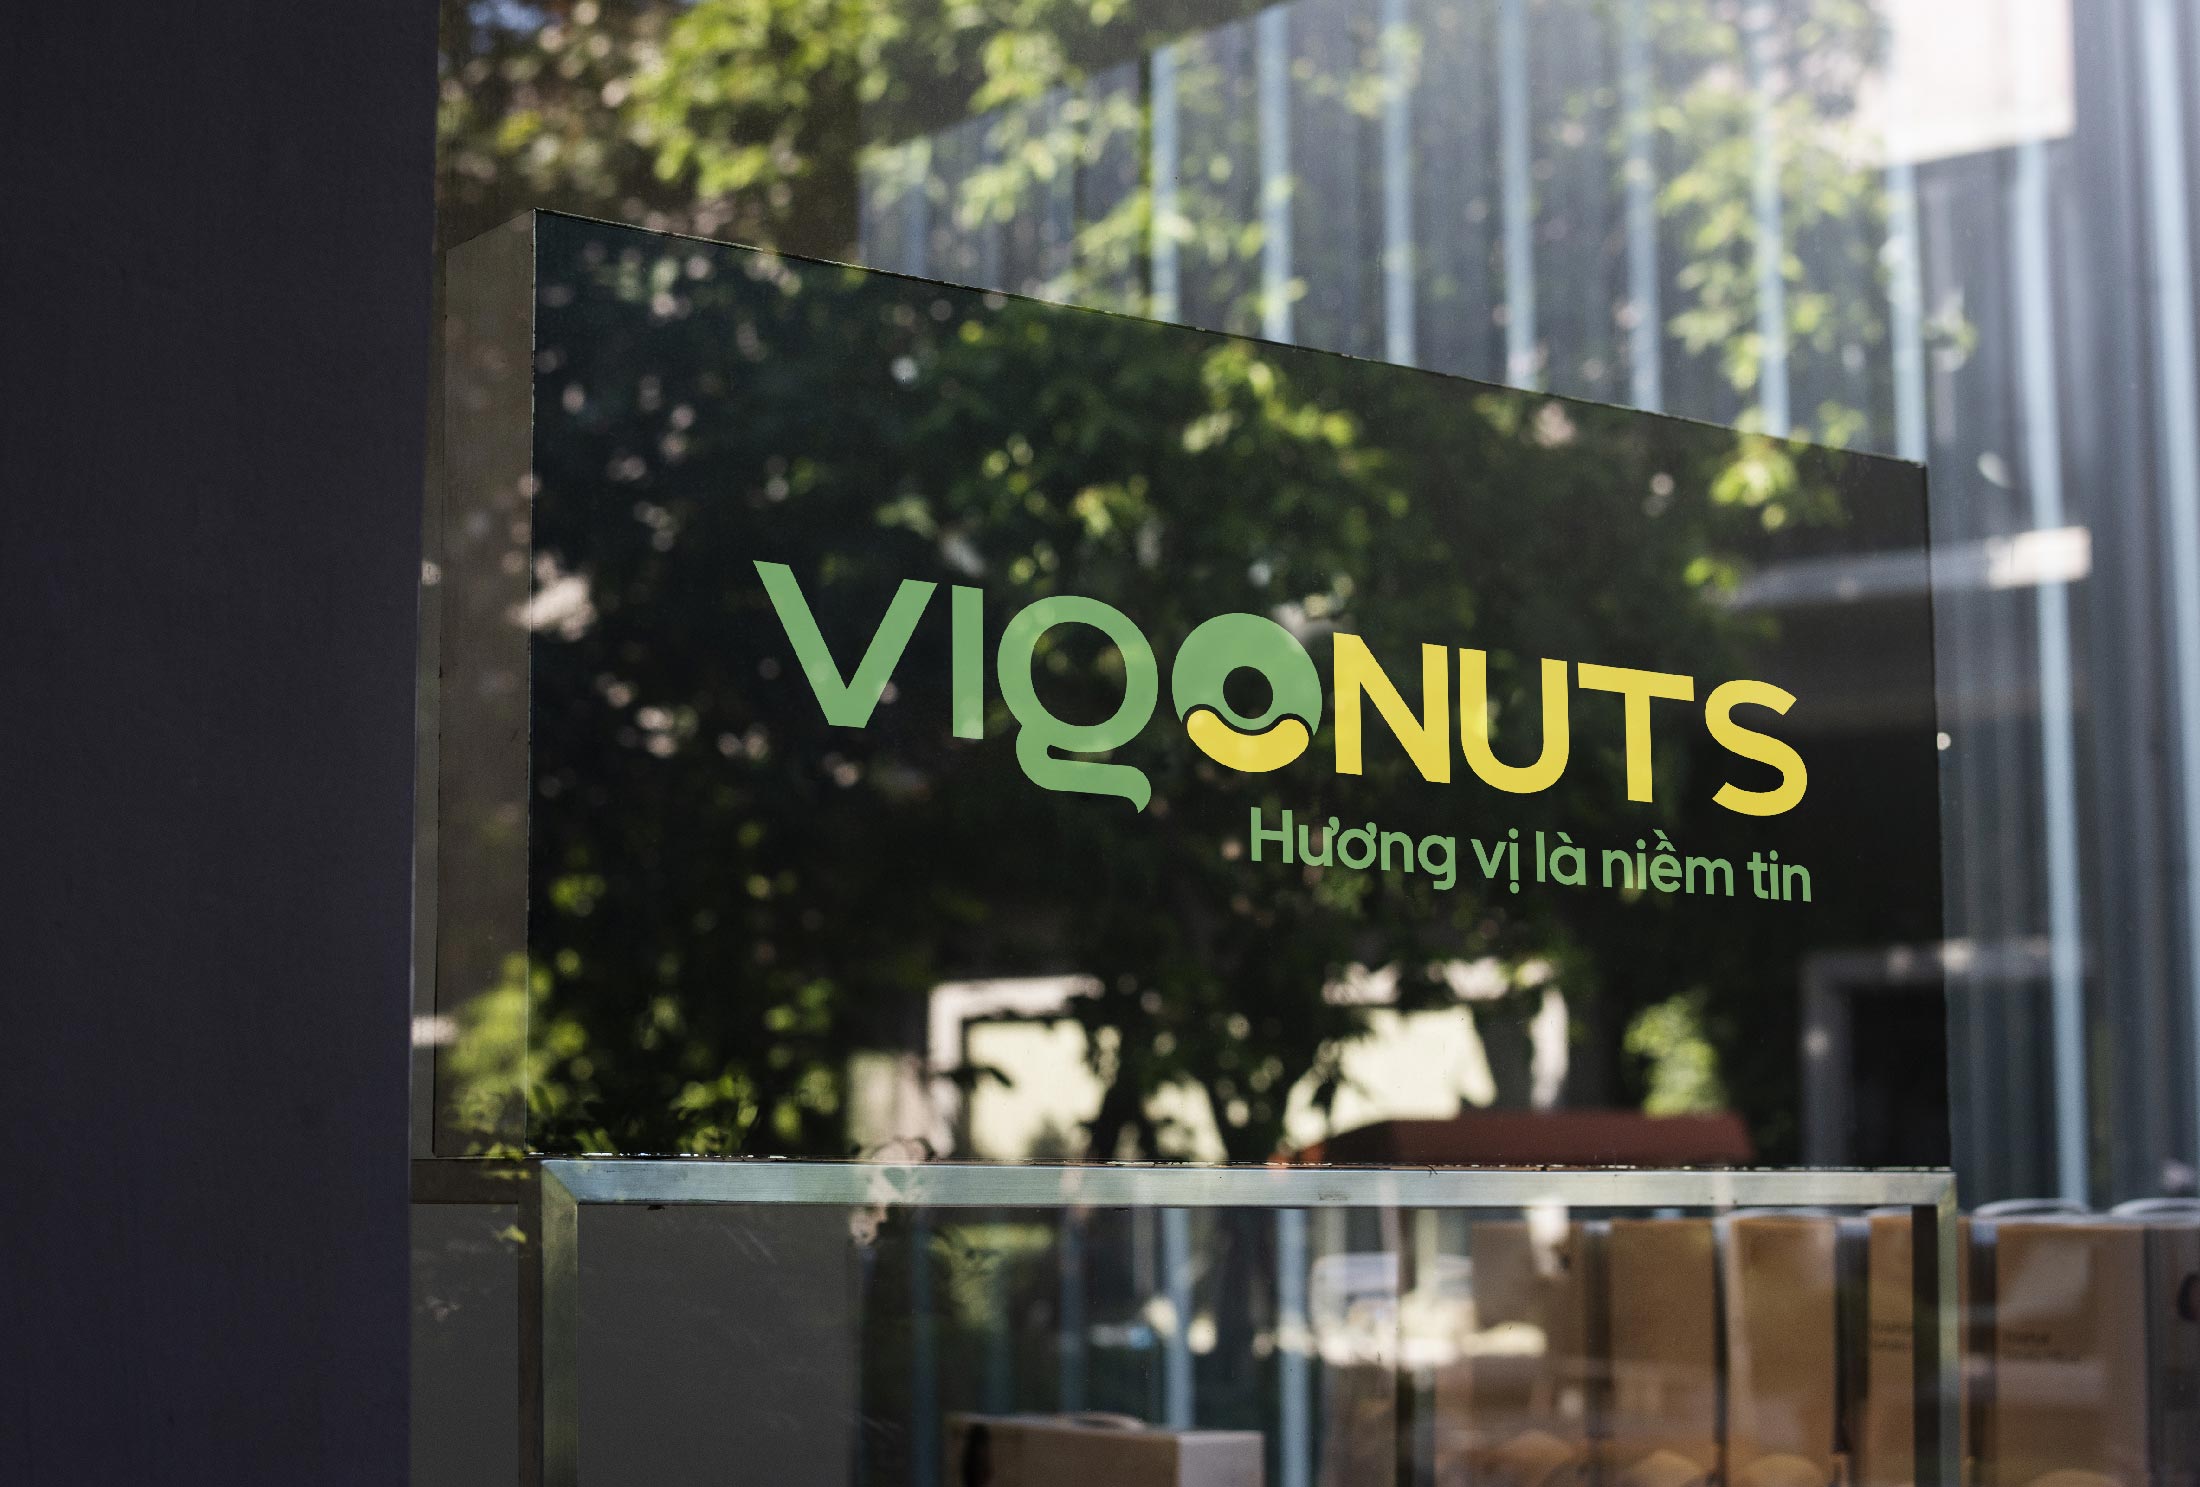 Vigonuts